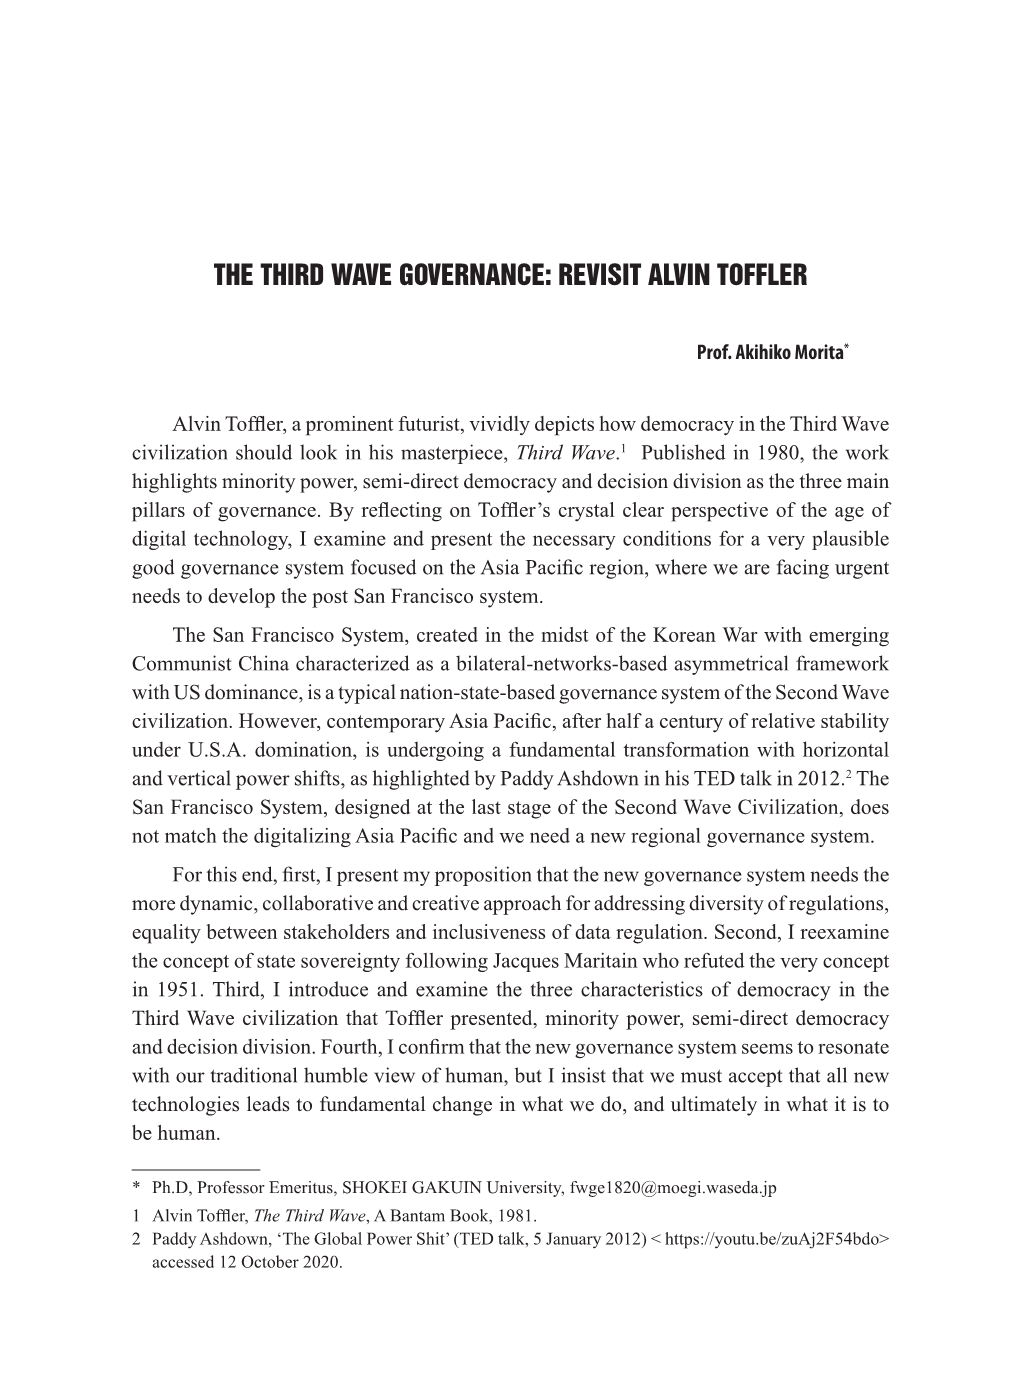 The Third Wave Governance: Revisit Alvin Toffler